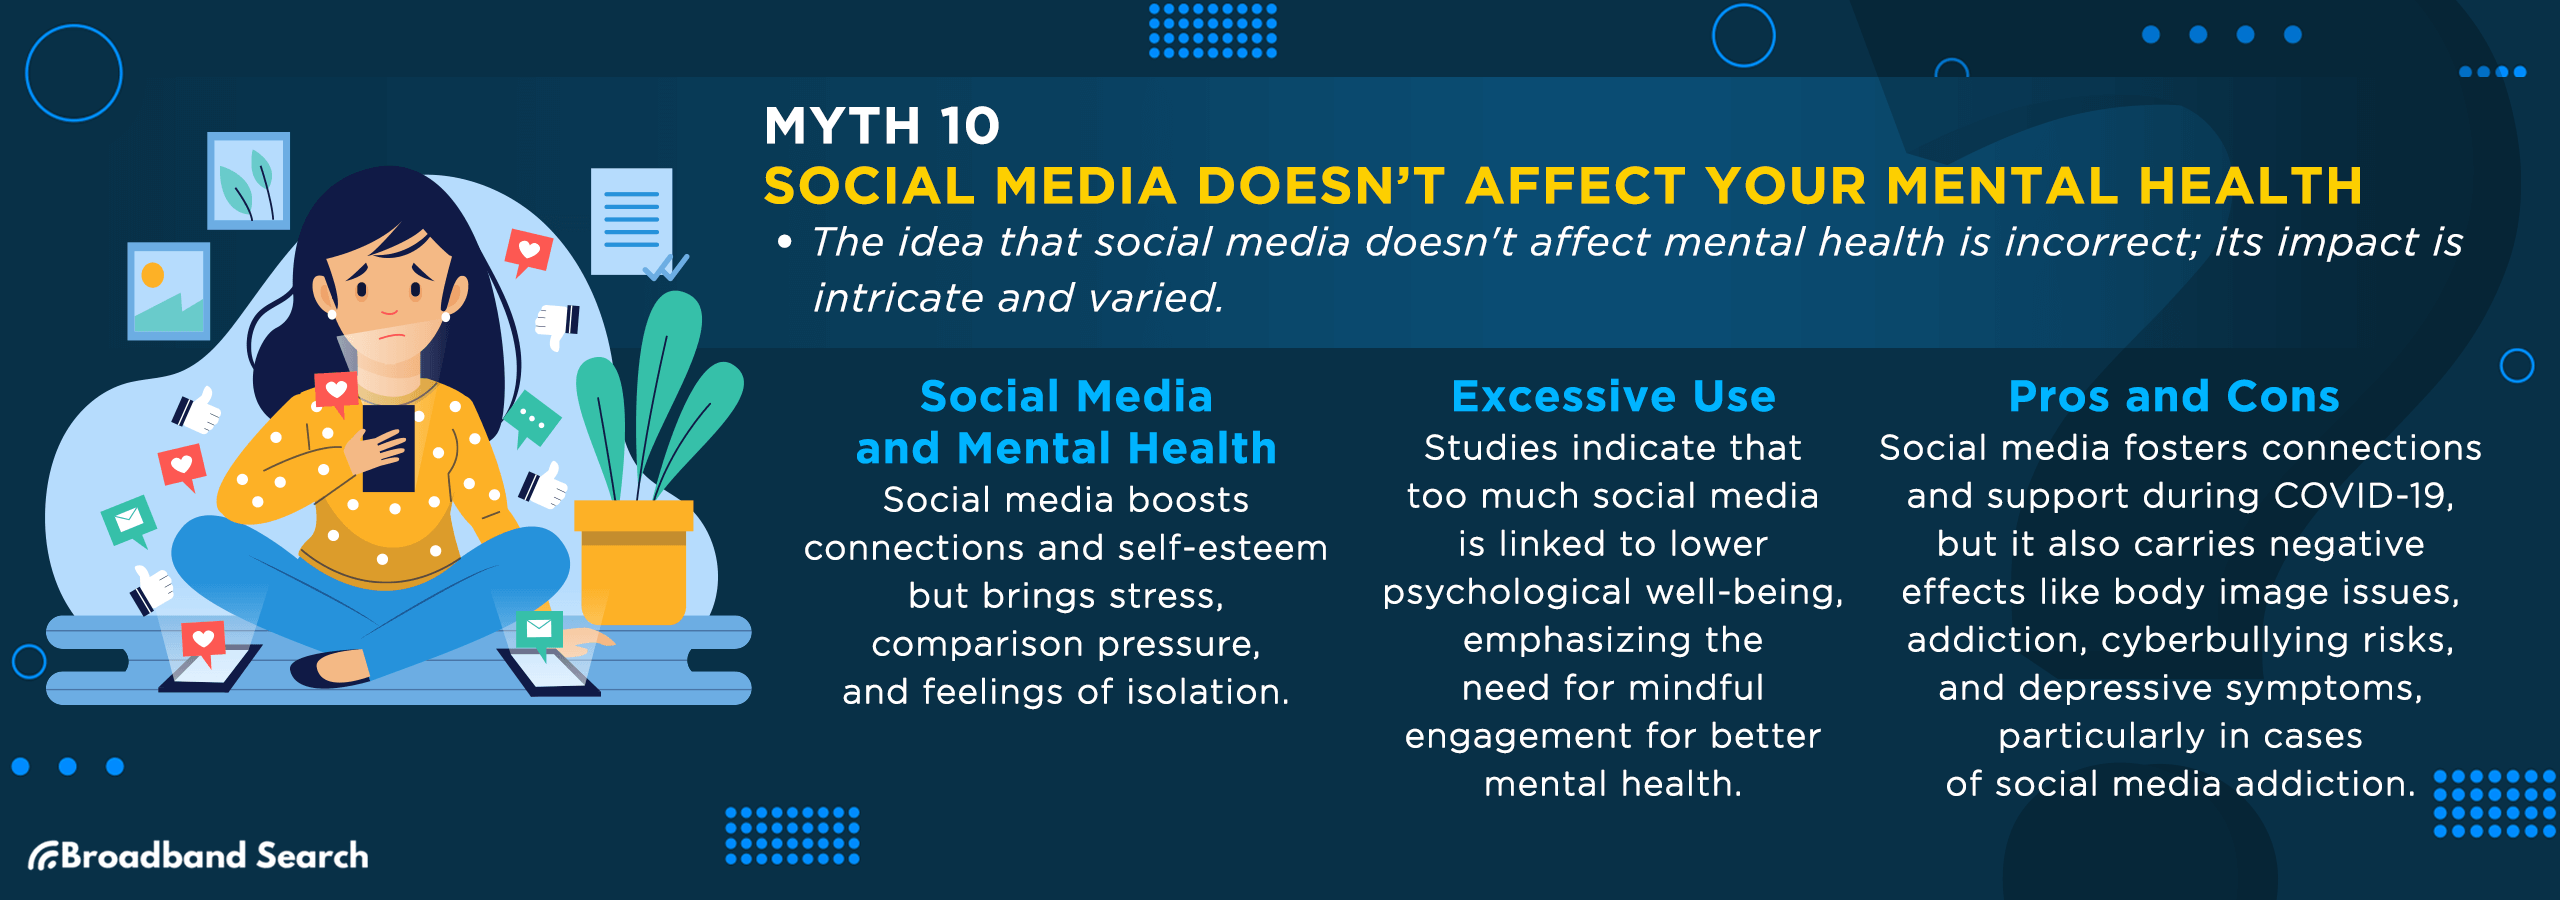 tenth internet myth, social media doesn't affect your mental health